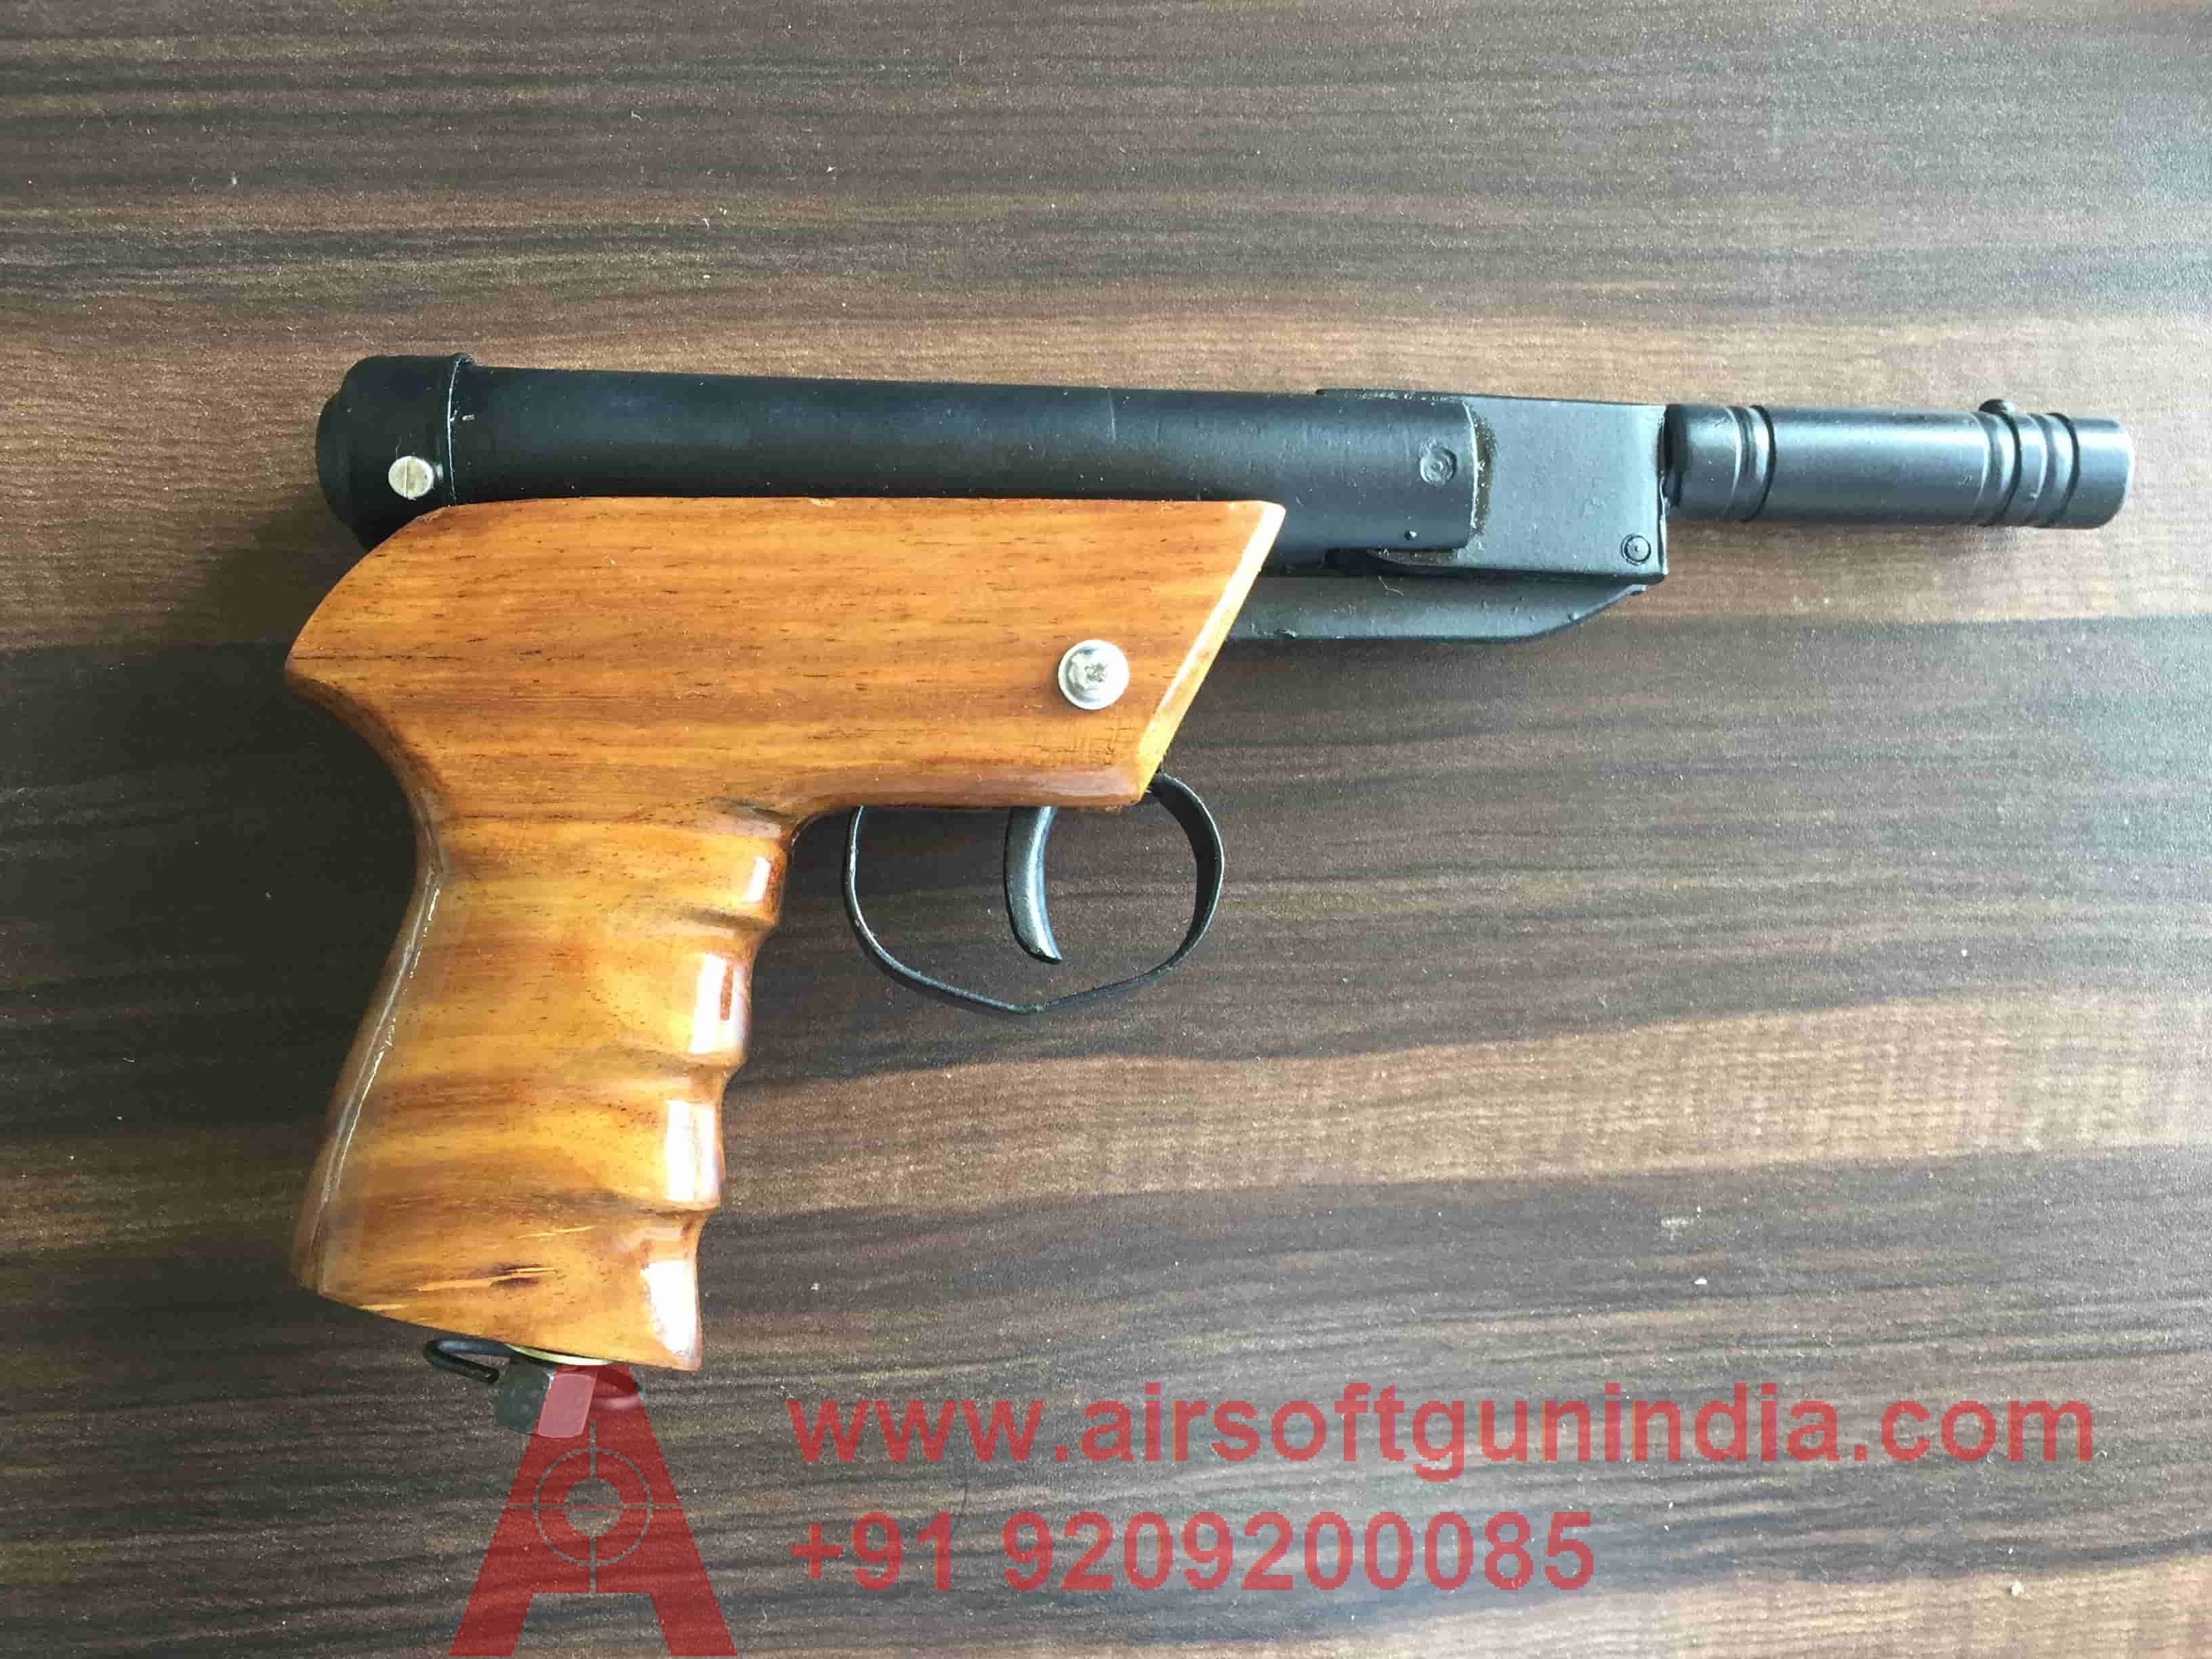 Bond Series-1 Air Pistol For Target Practice Metal Body With Wooden Handle (Black, Brown)